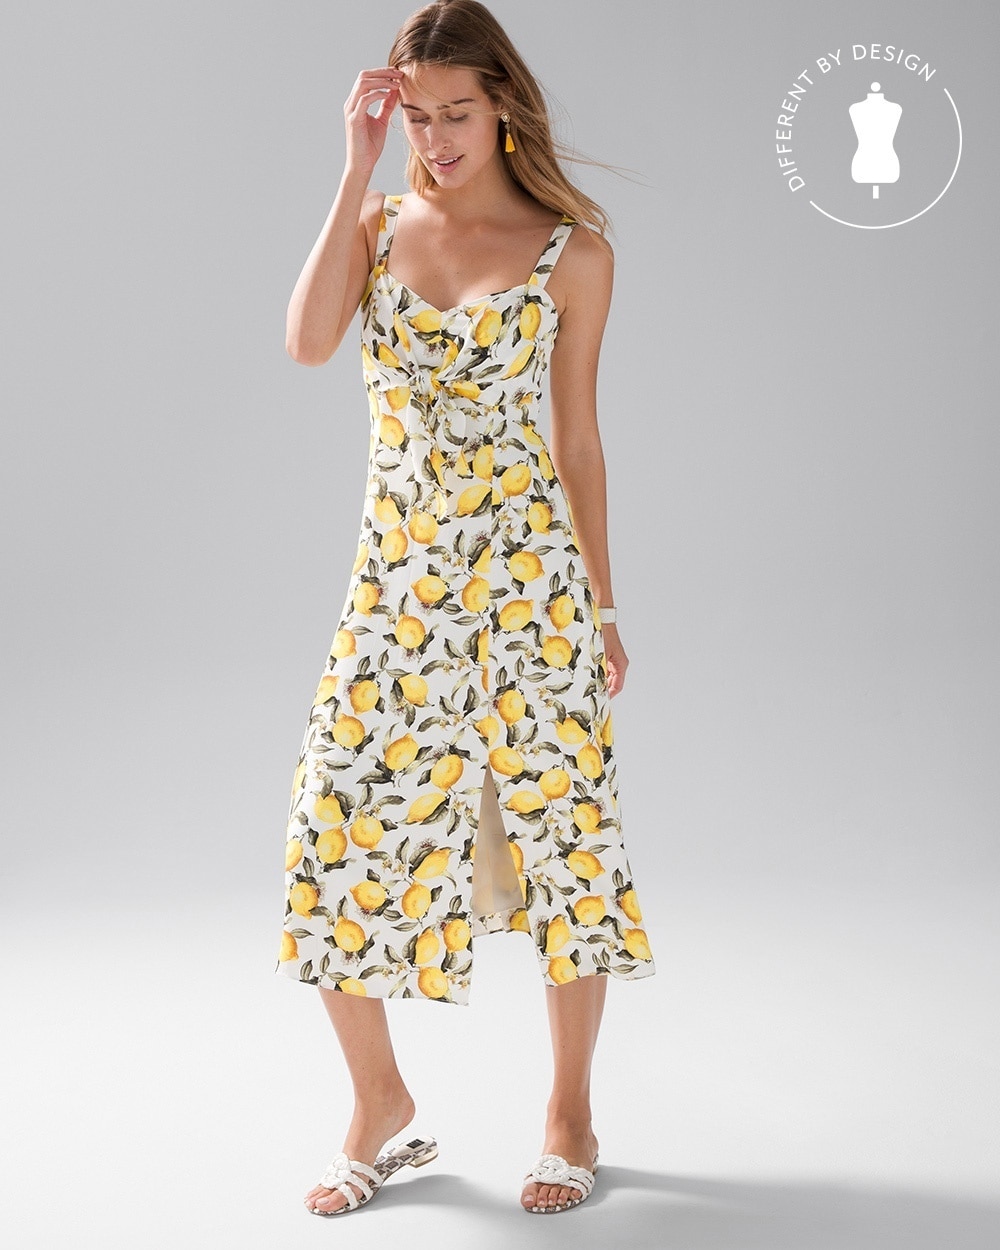 Lemon Print Tie-Front Midi Dress video preview image, click to start video